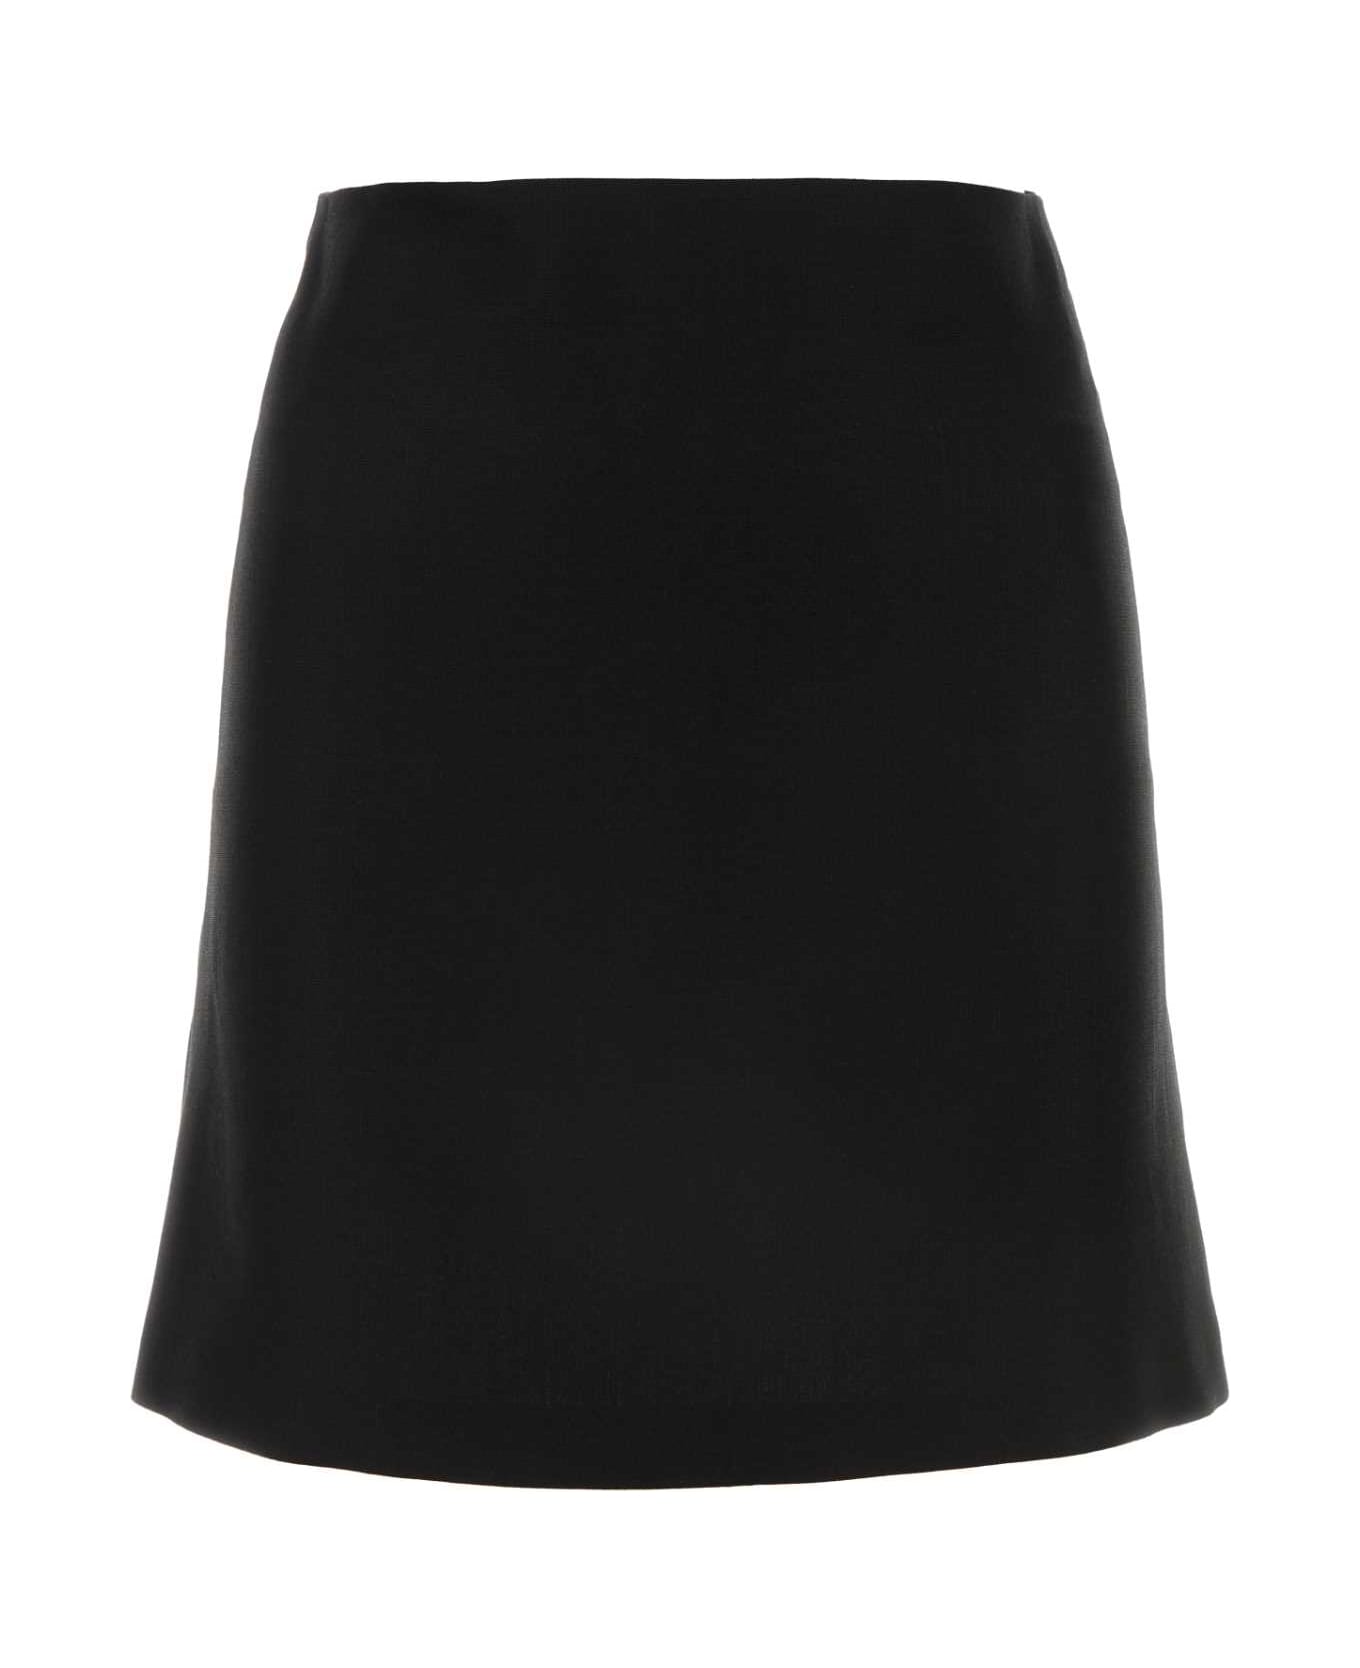 Philosophy di Lorenzo Serafini Black Viscose Blend Mini Skirt - 0555 スカート